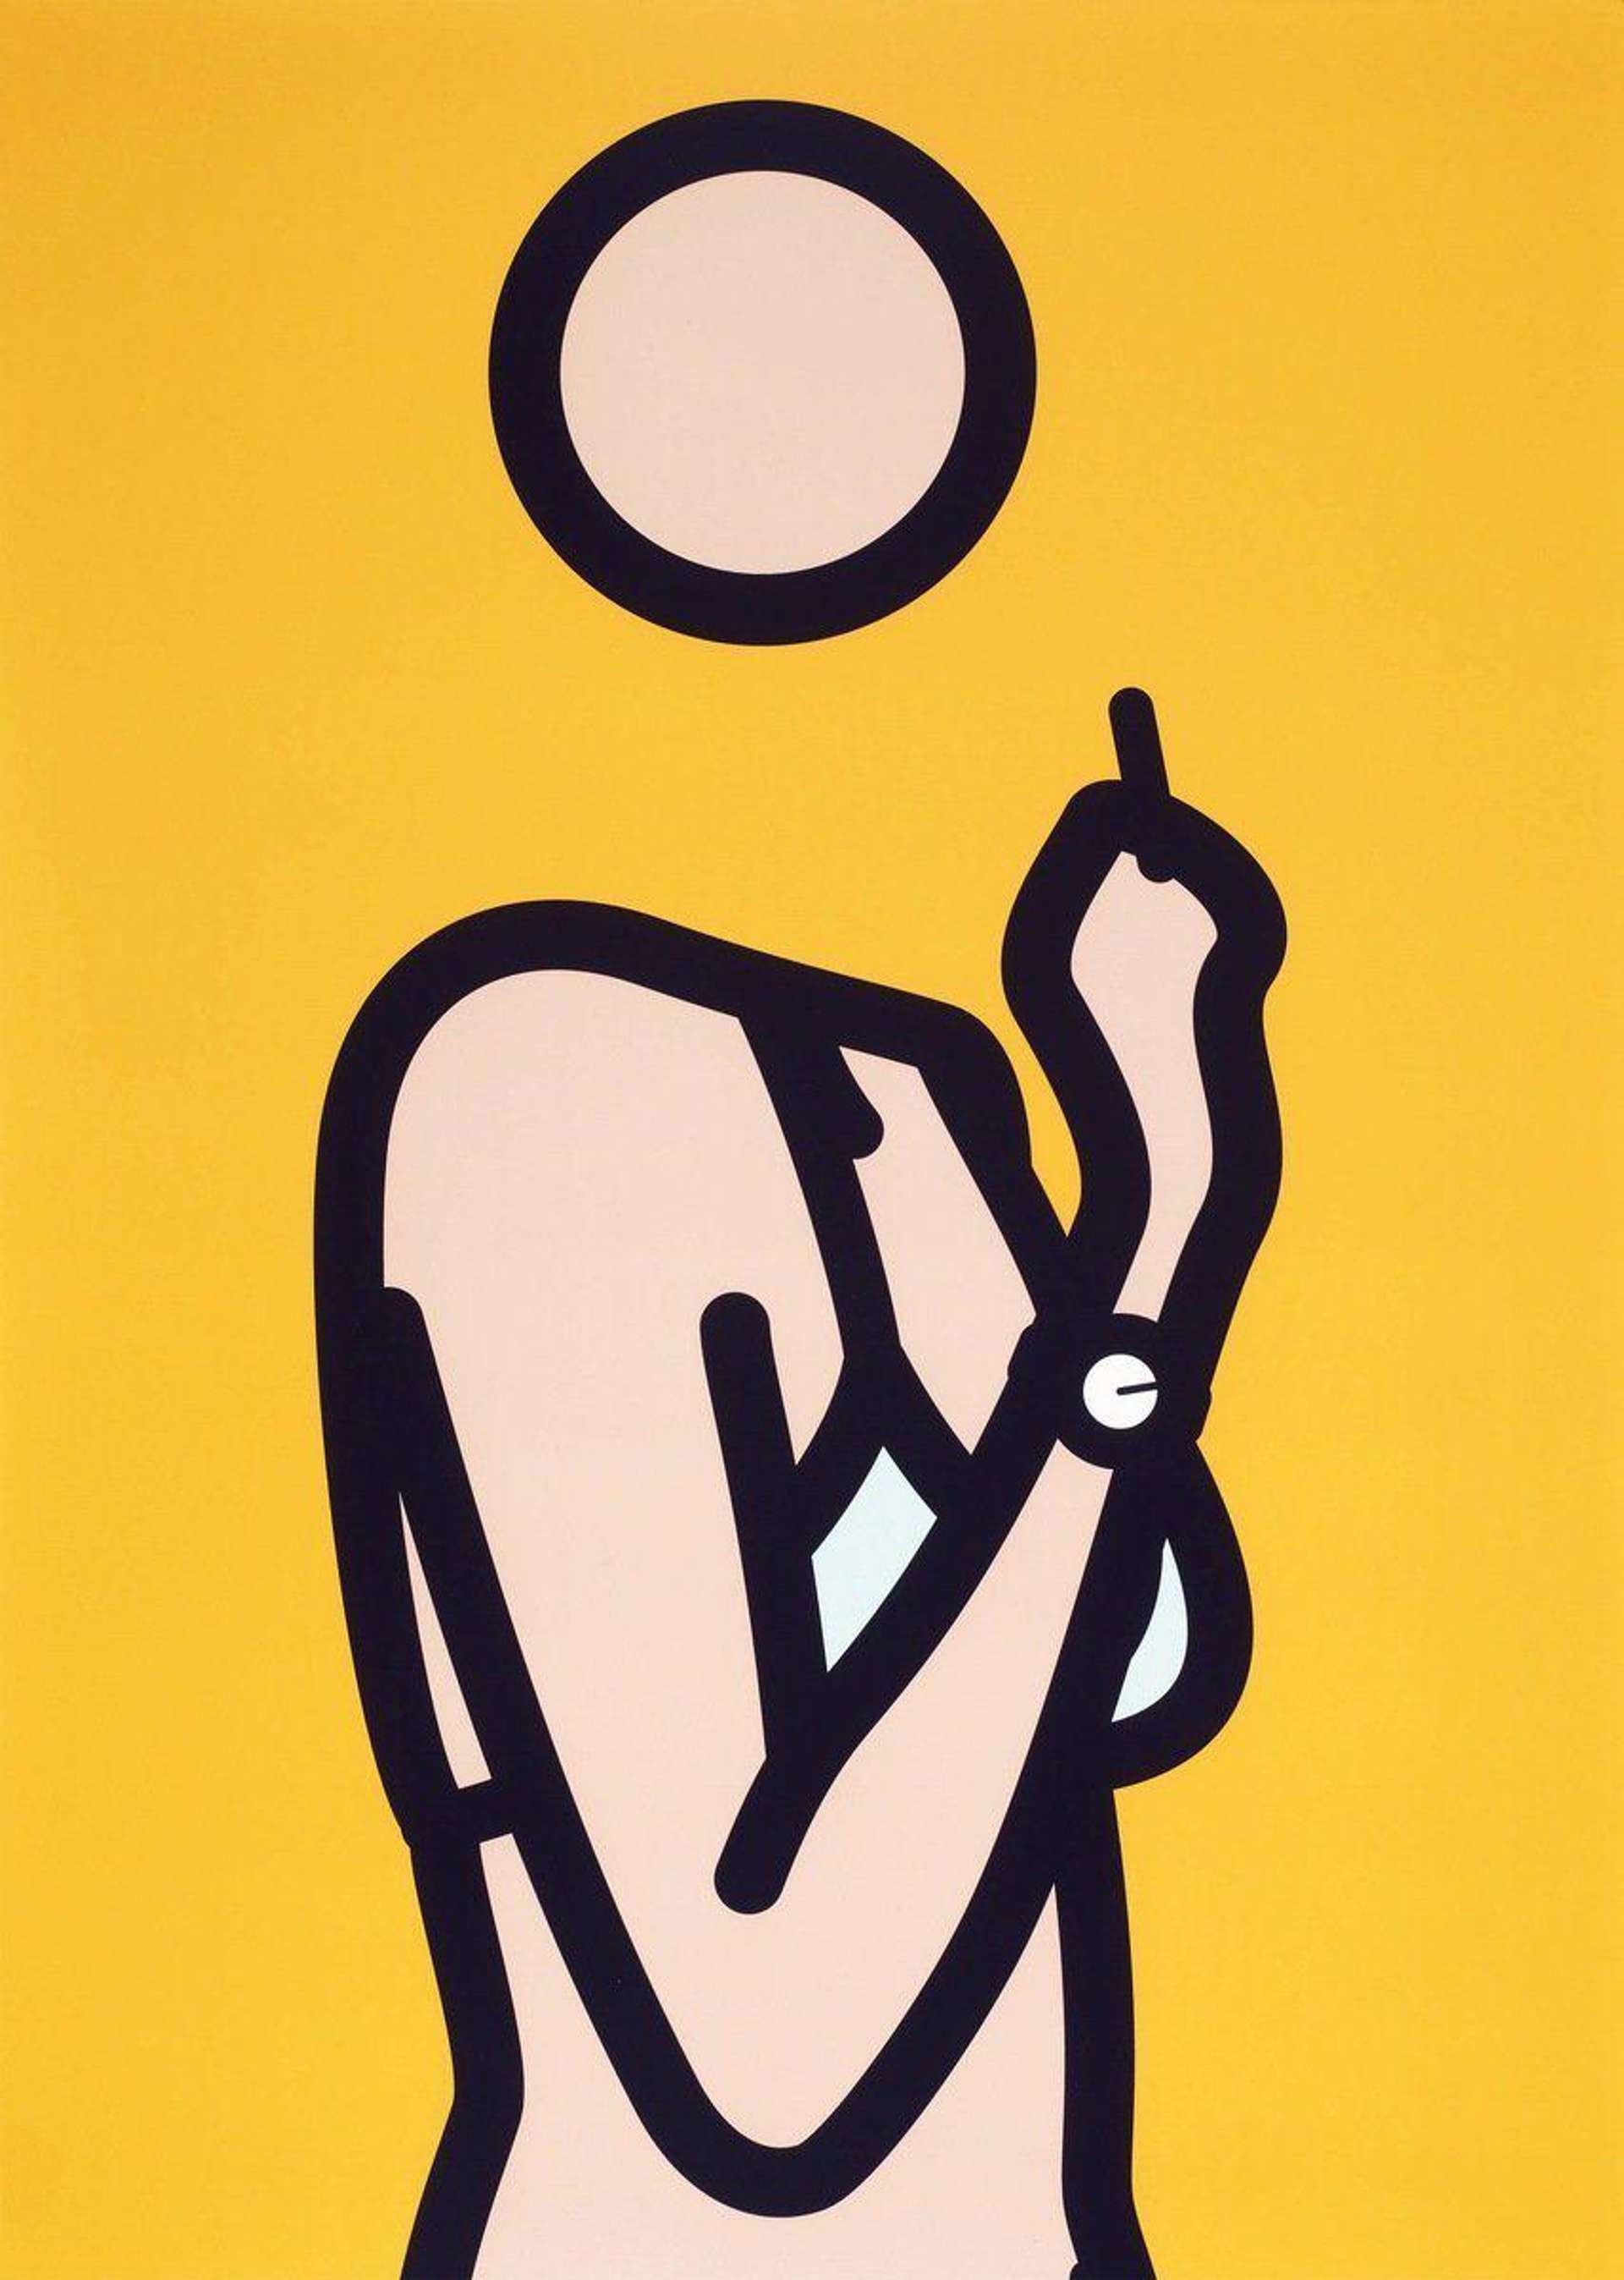 Ruth With Cigarette 3 - Signed Print by Julian Opie 2005 - MyArtBroker